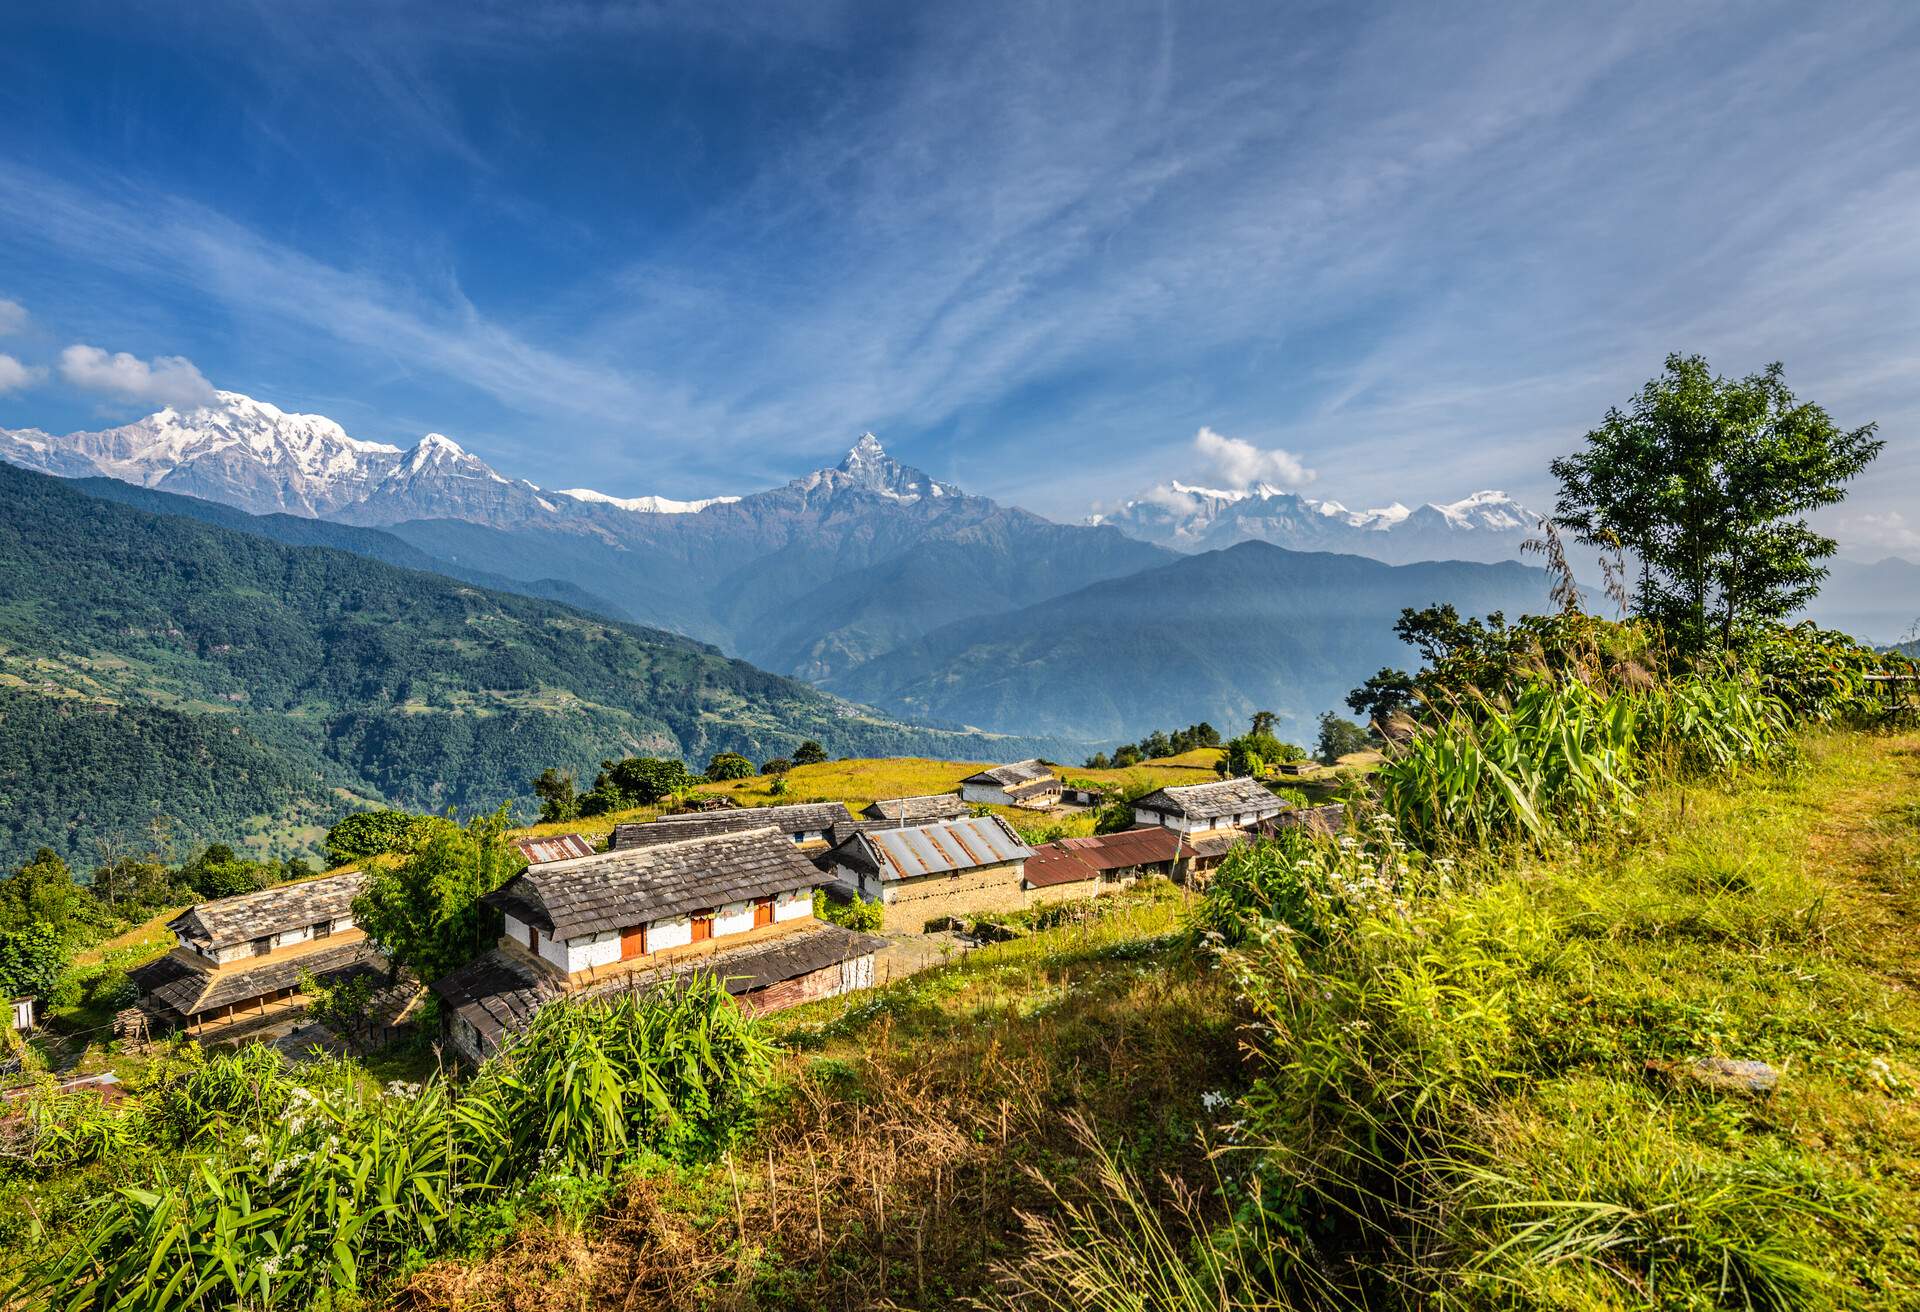 NEPAL_POKHARA_Nepalese village in the Himalaya mountains